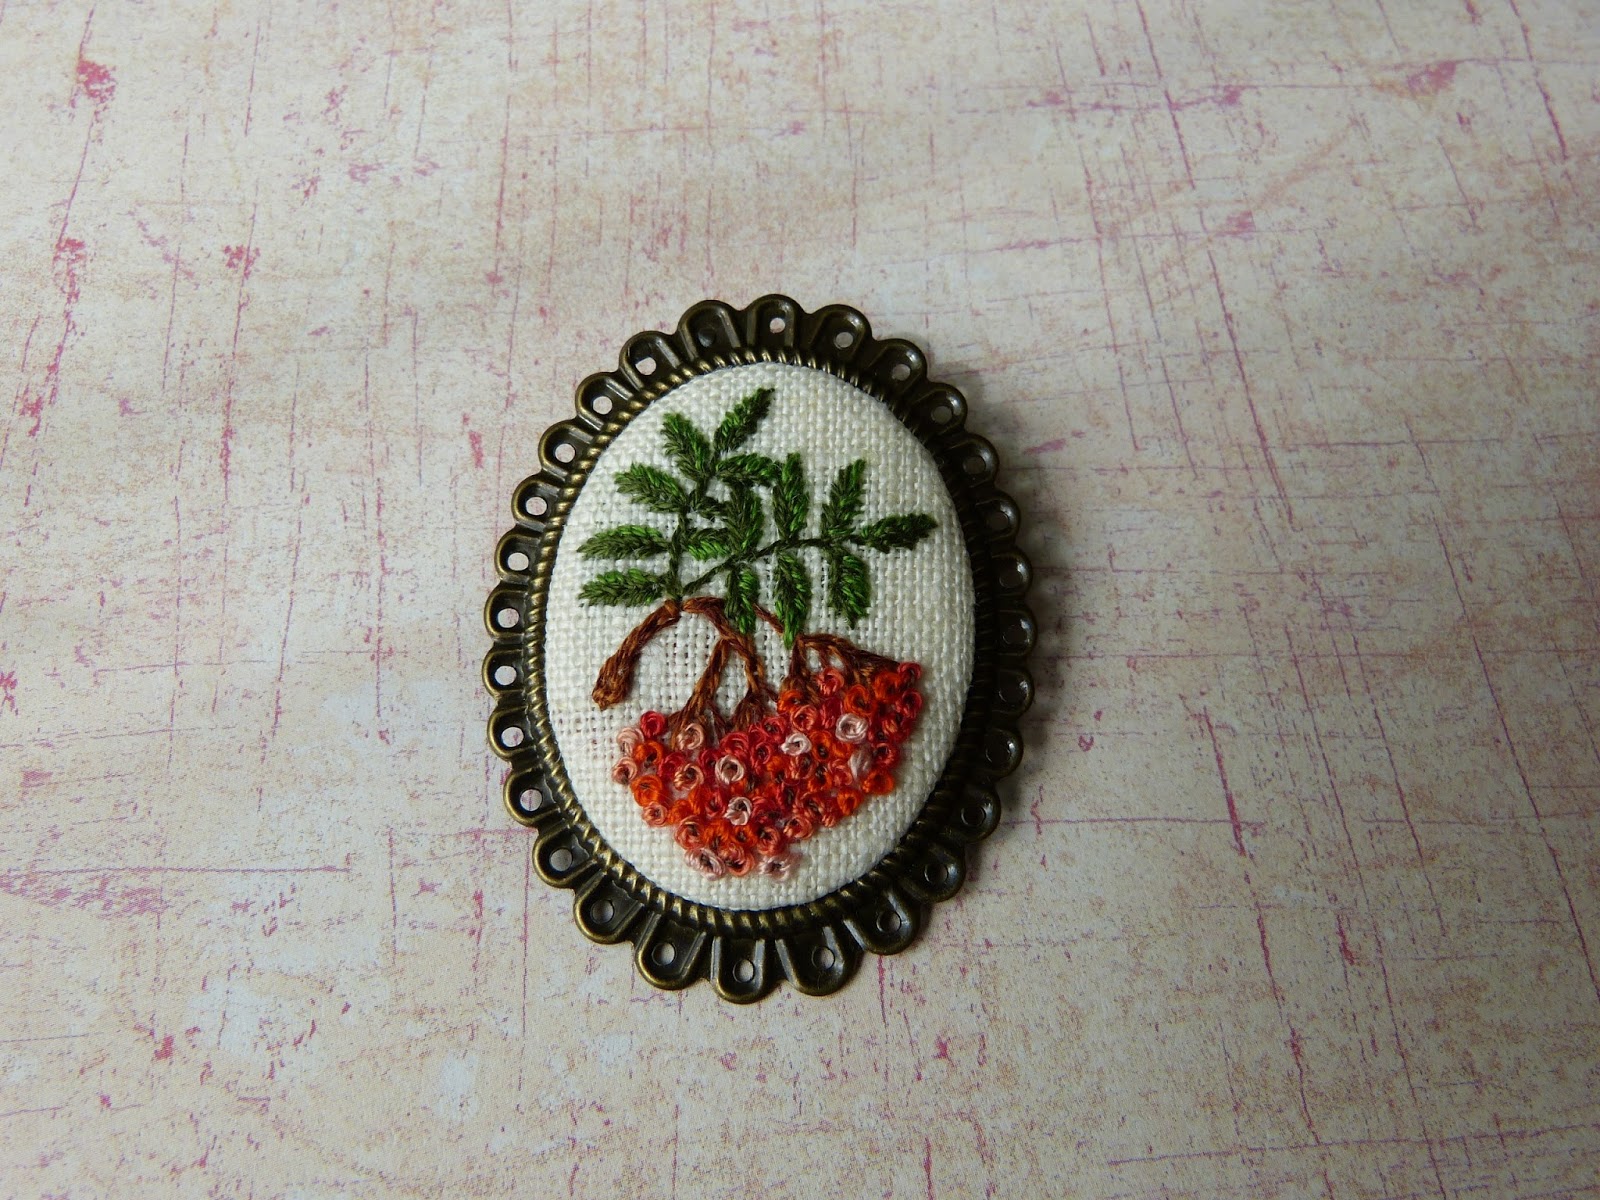 haftowana biżuteria, handmade jewerly, ebbroidered jewerly, broszka z haftem, embroidered pendant, embroidered brooch